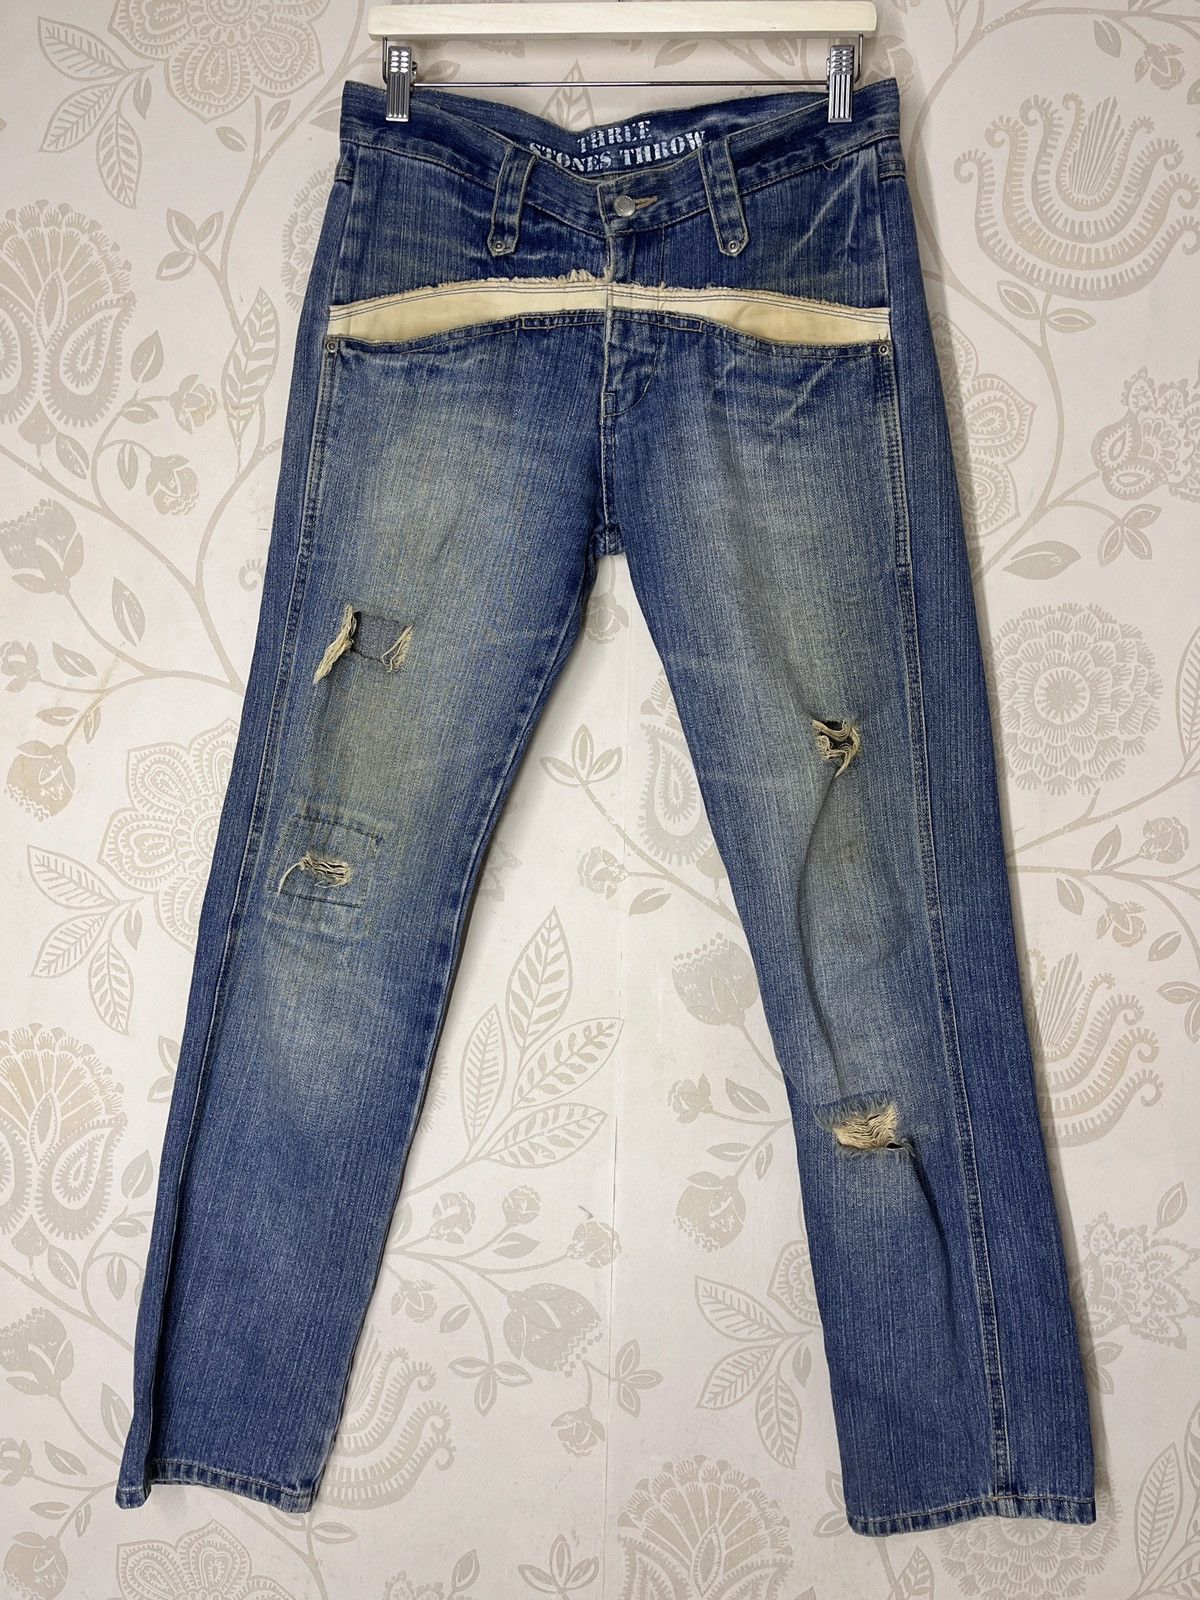 Ripped Three Stones Throw Denim Jeans Avant Garde Pockets - 1